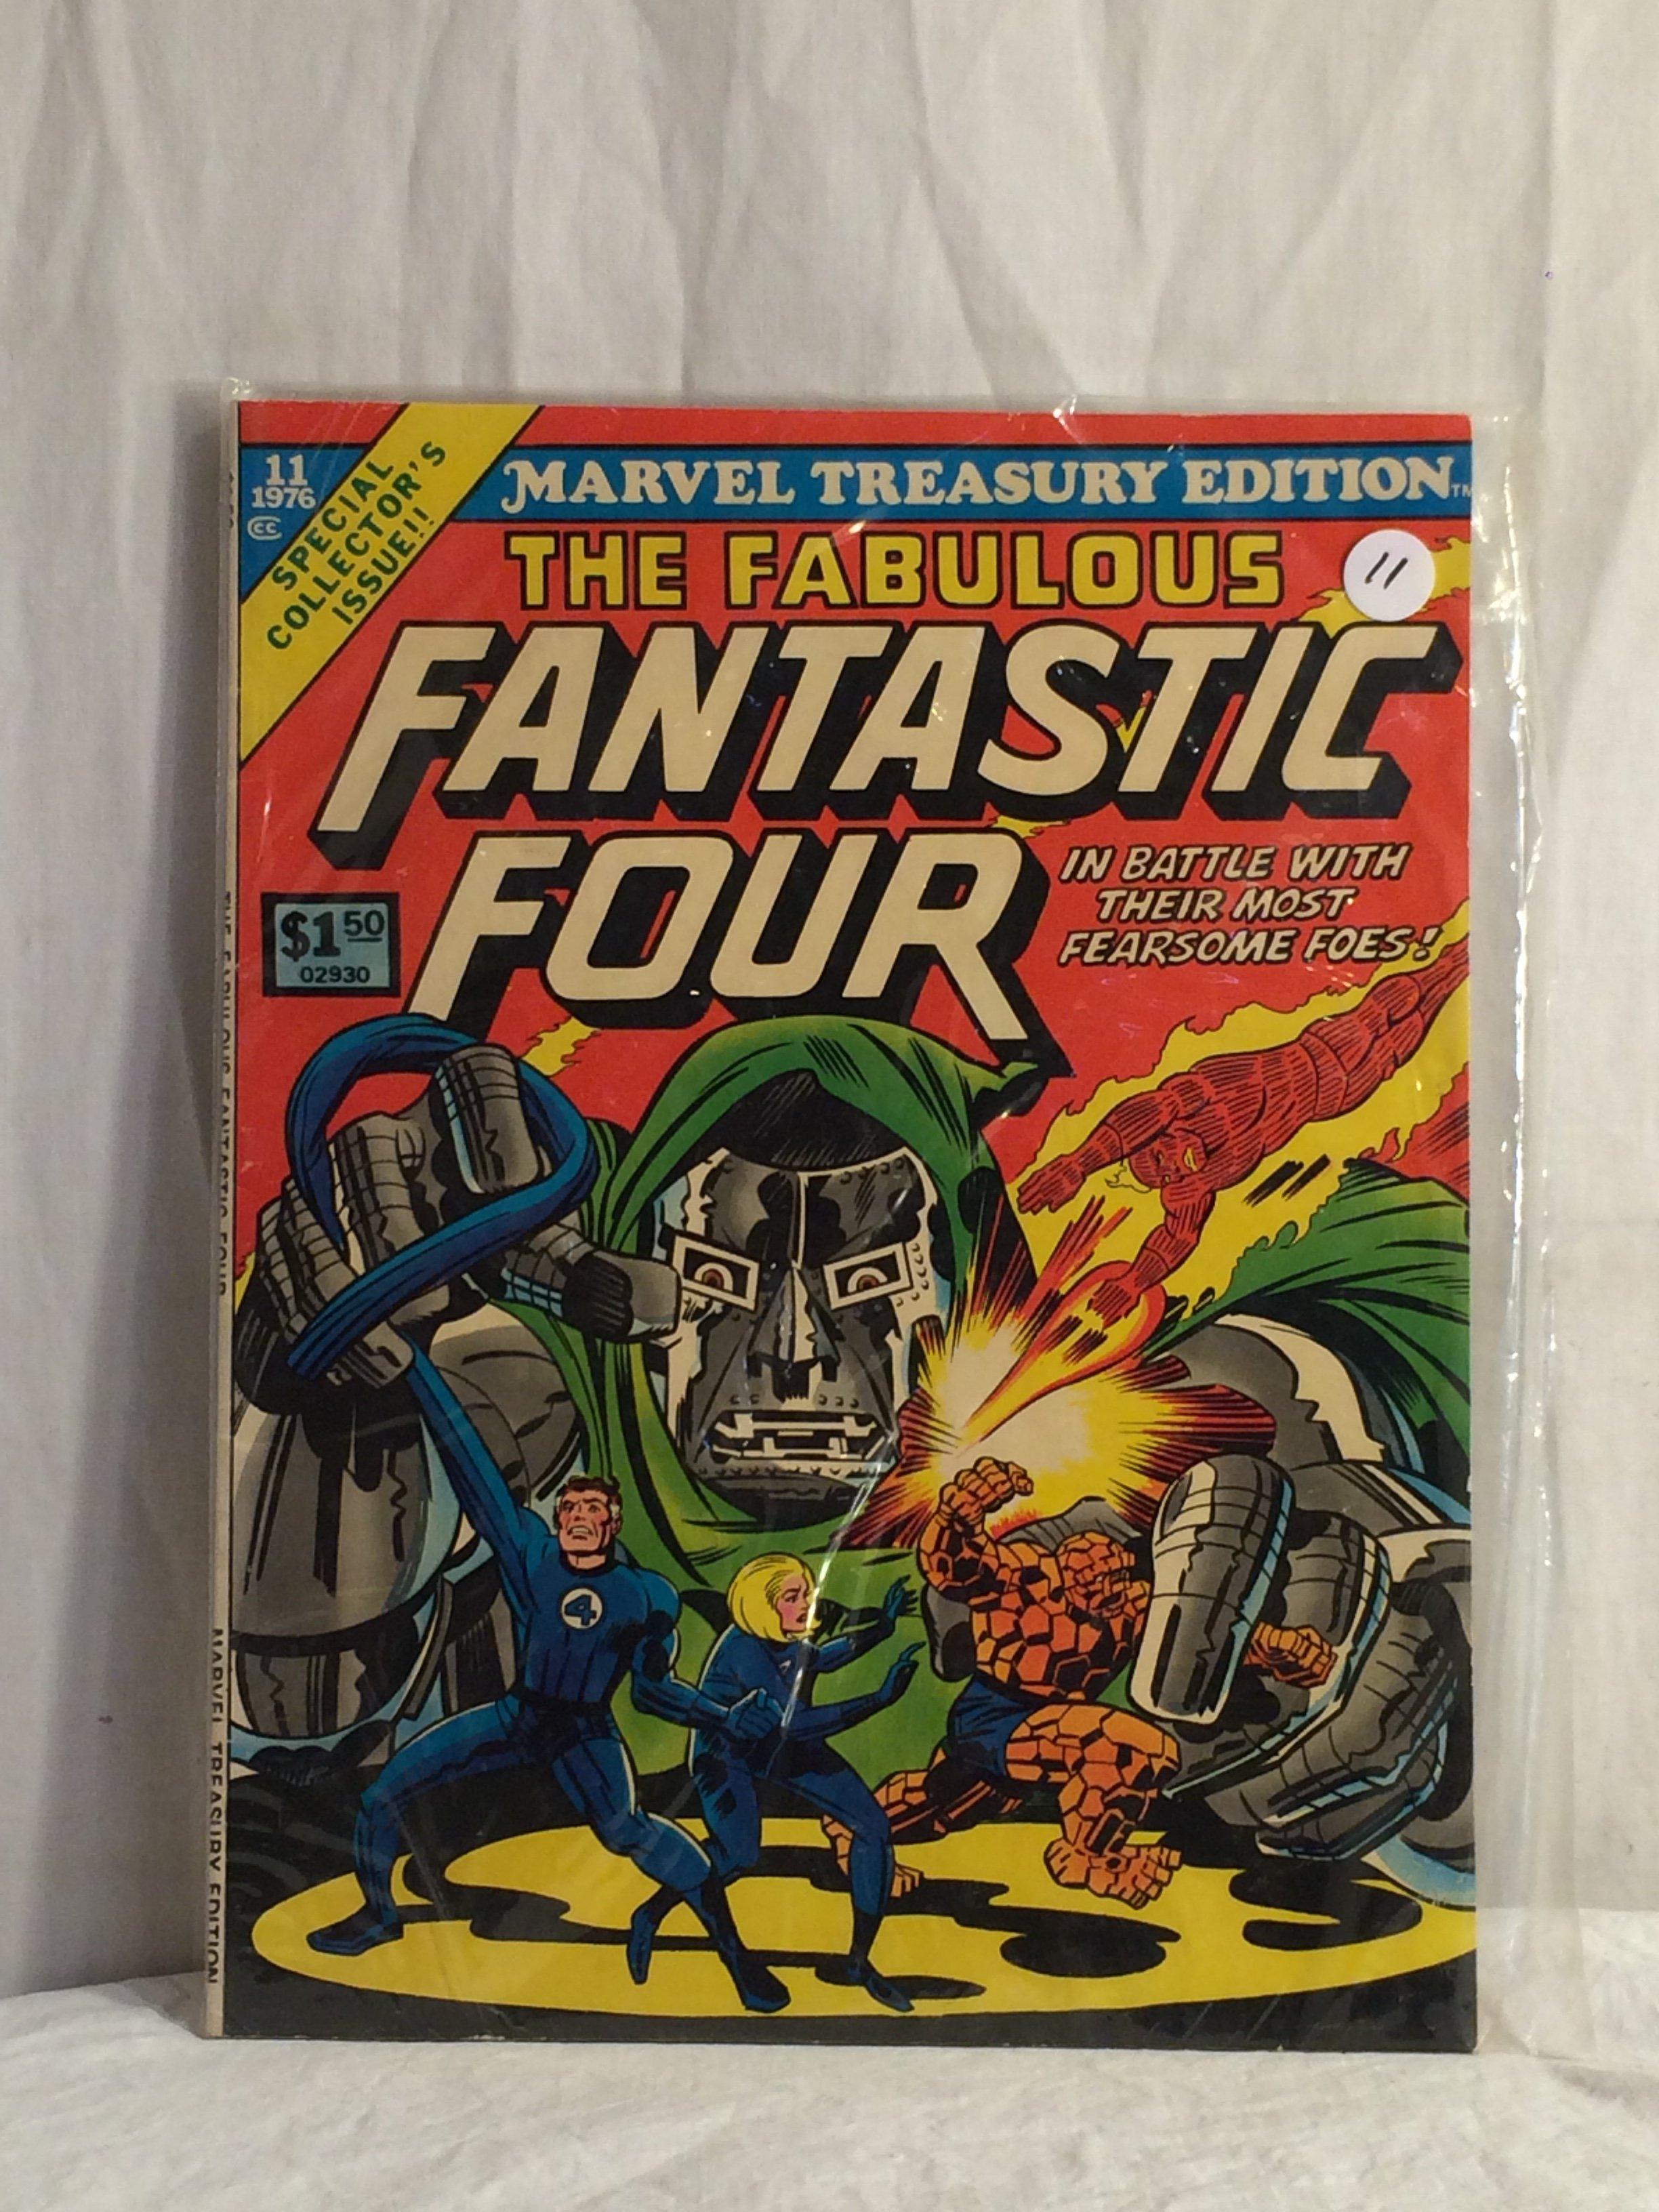 Collector Vintage Marvel Treasury Adition The Fabulous Fantastic Four Comics Magazine